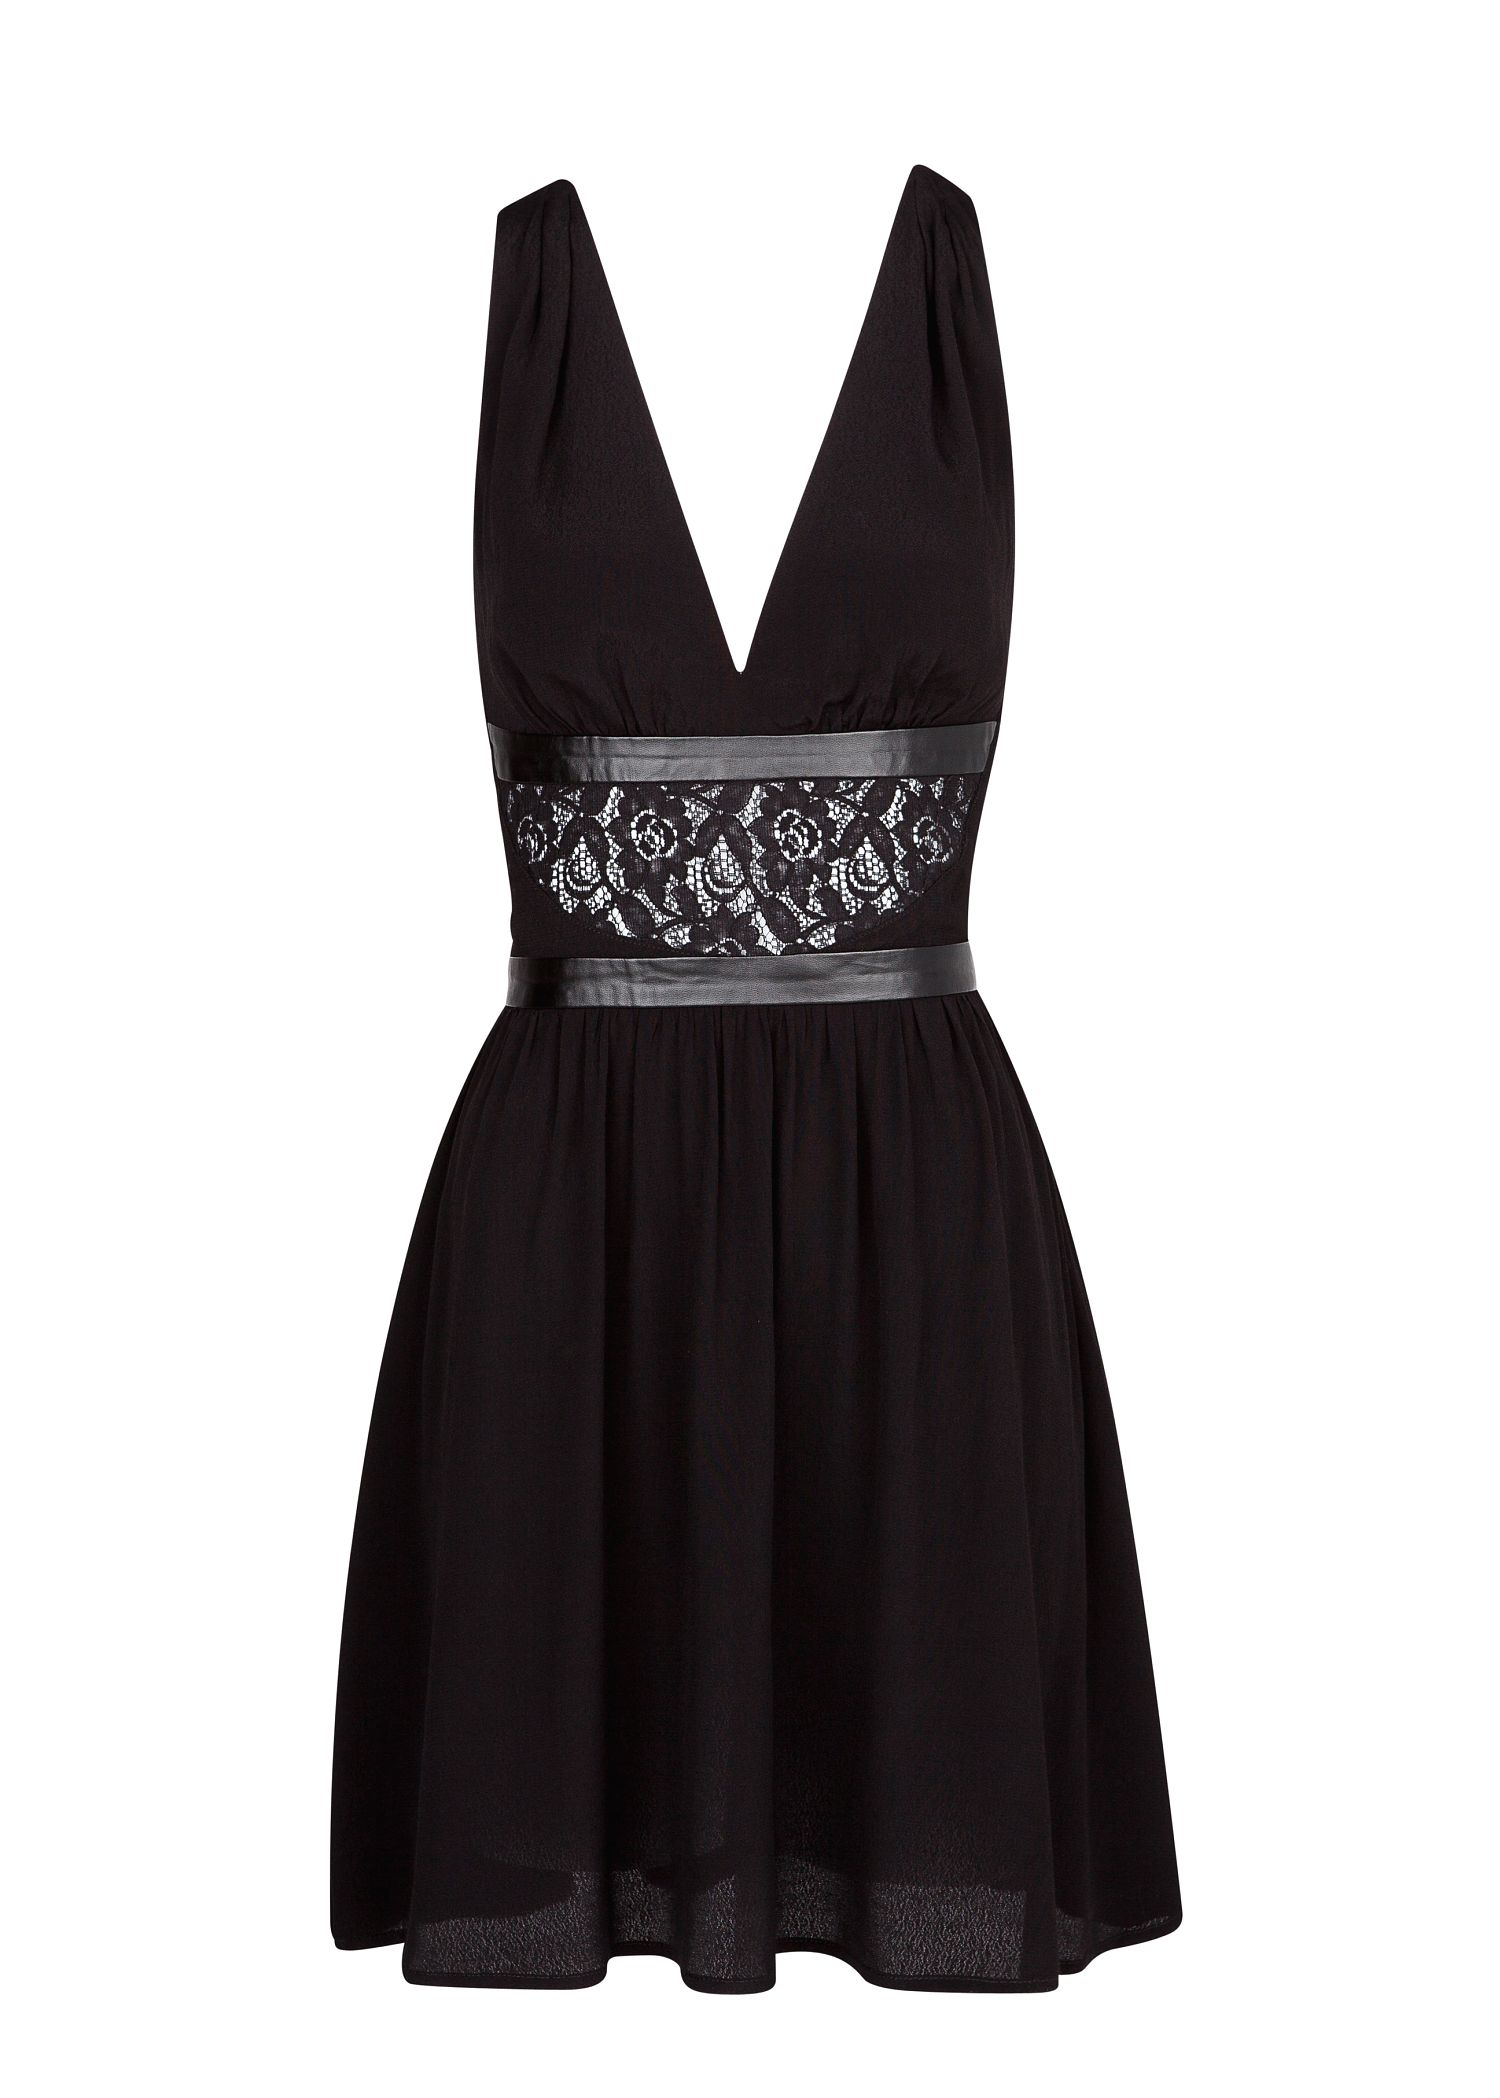 short flowy black dress